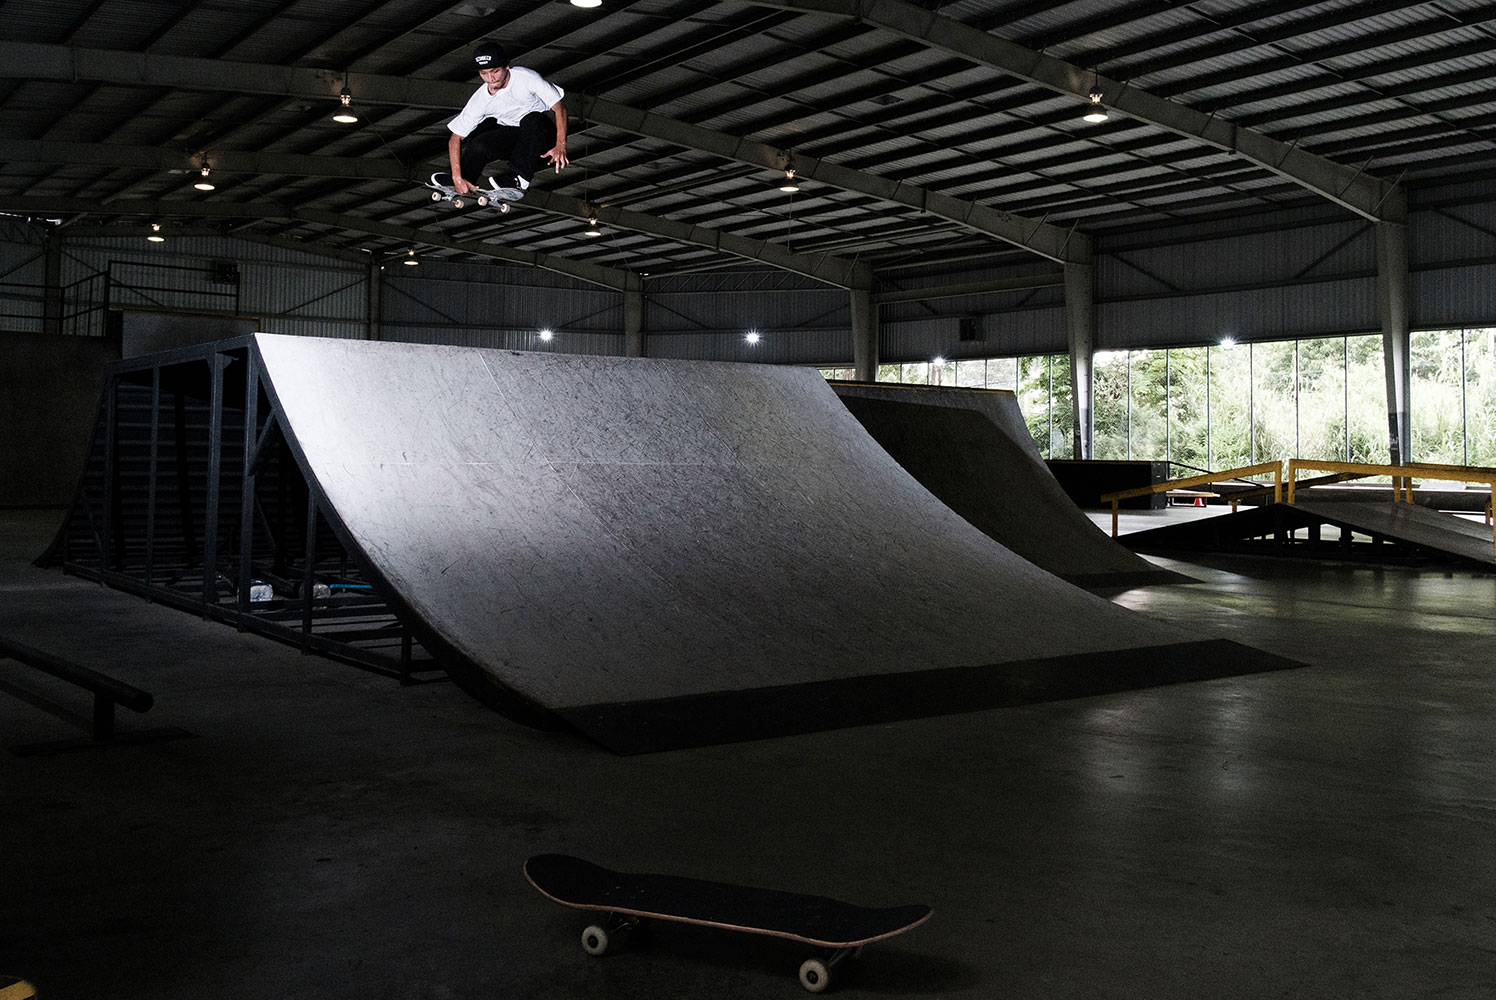 Skateboard half pipe filming location in Bangkok Thailand